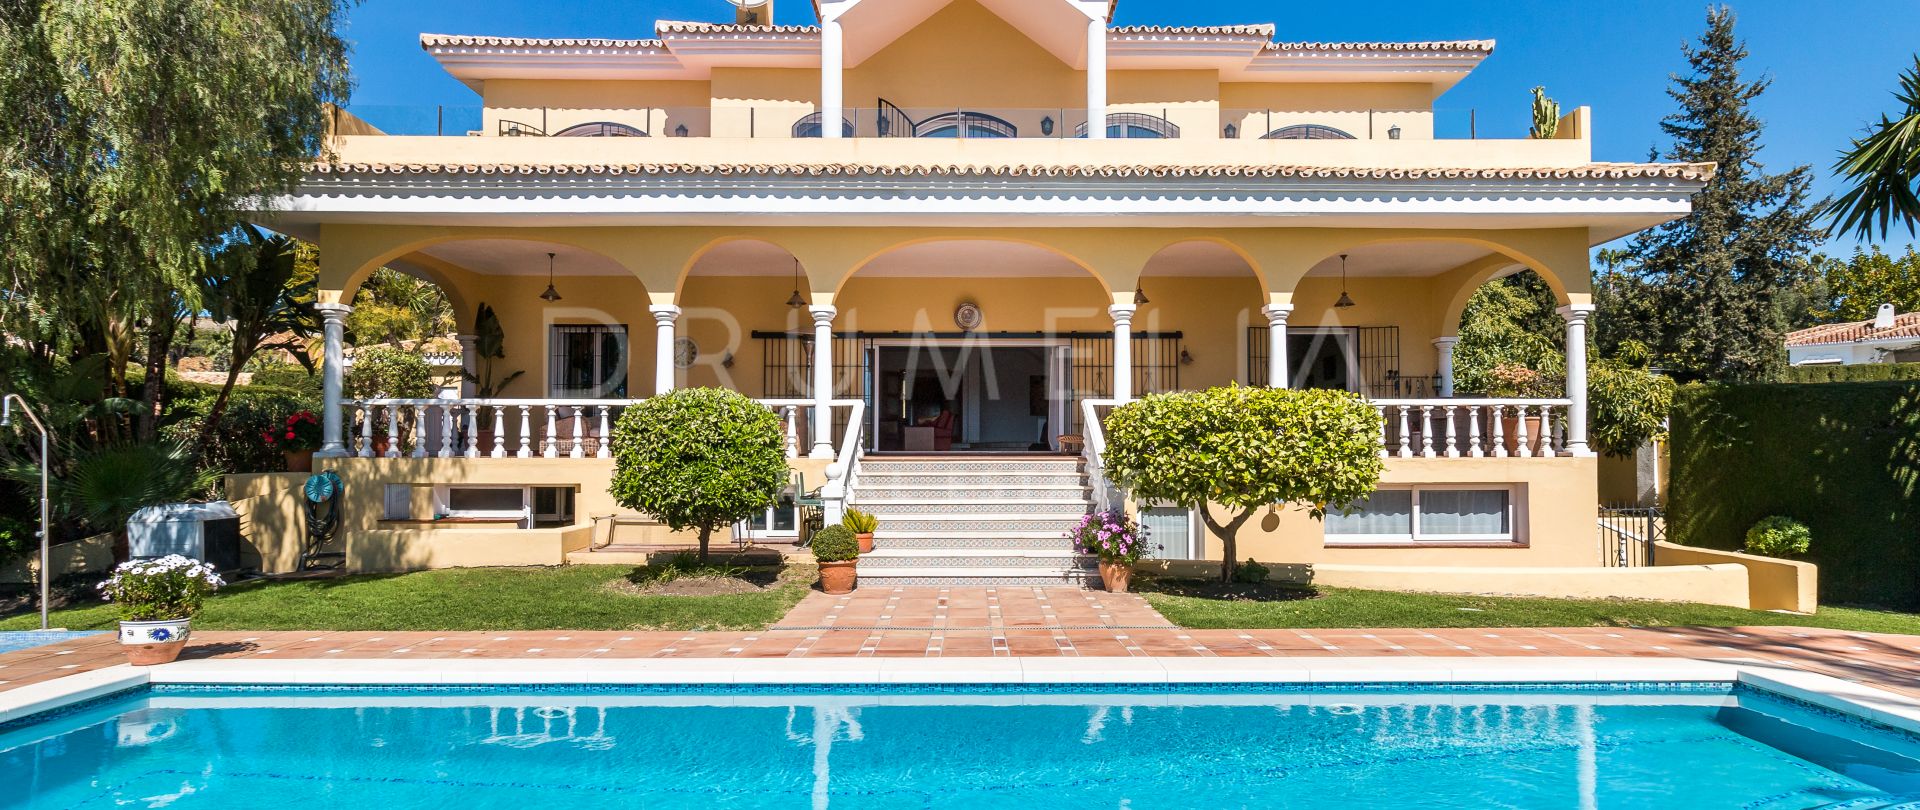 Elegante Villa de diseño clasico en venta en Paraiso Alto, Benahavis